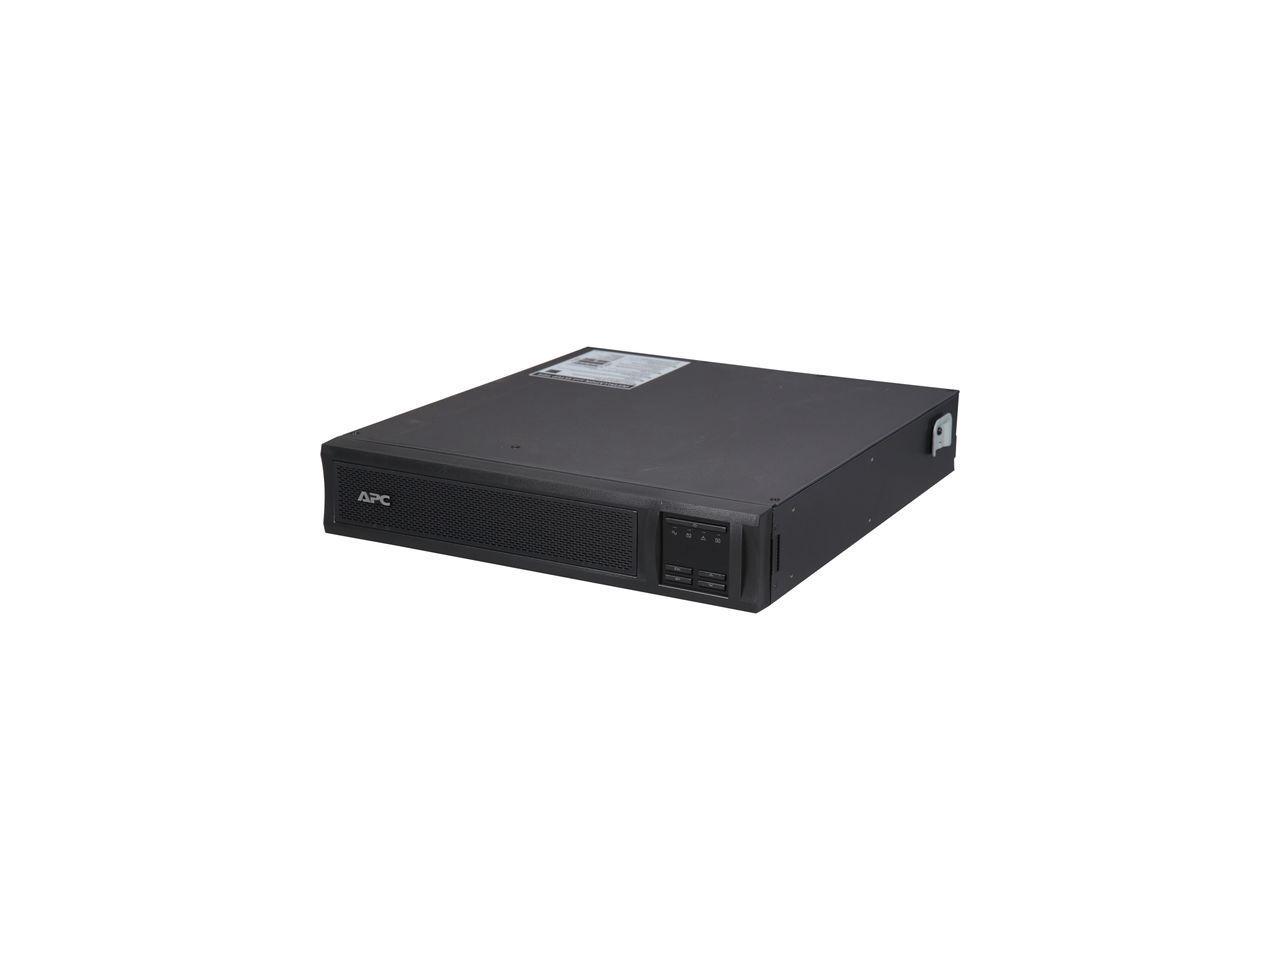 APC UPS, 1500 VA Smart-UPS Sine Wave UPS Battery Backup with Extended Run Option, 2U Rackmount/Tower Convertible, Line-Interactive, 120V (SMX1500RM2U)